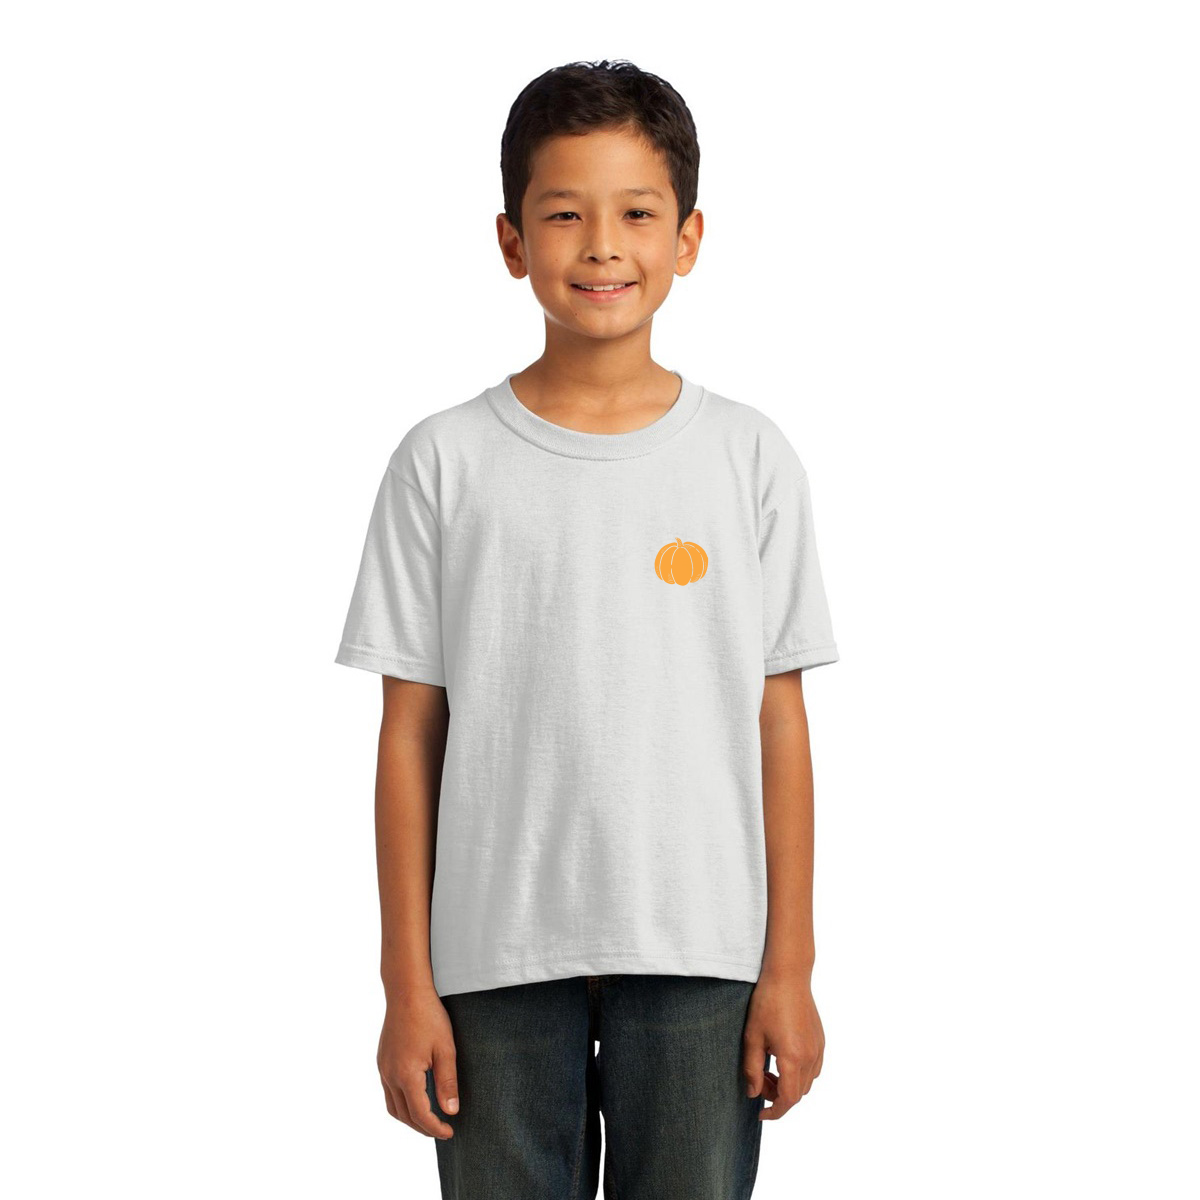 Pumpkin Pocket Kids T-shirt | White